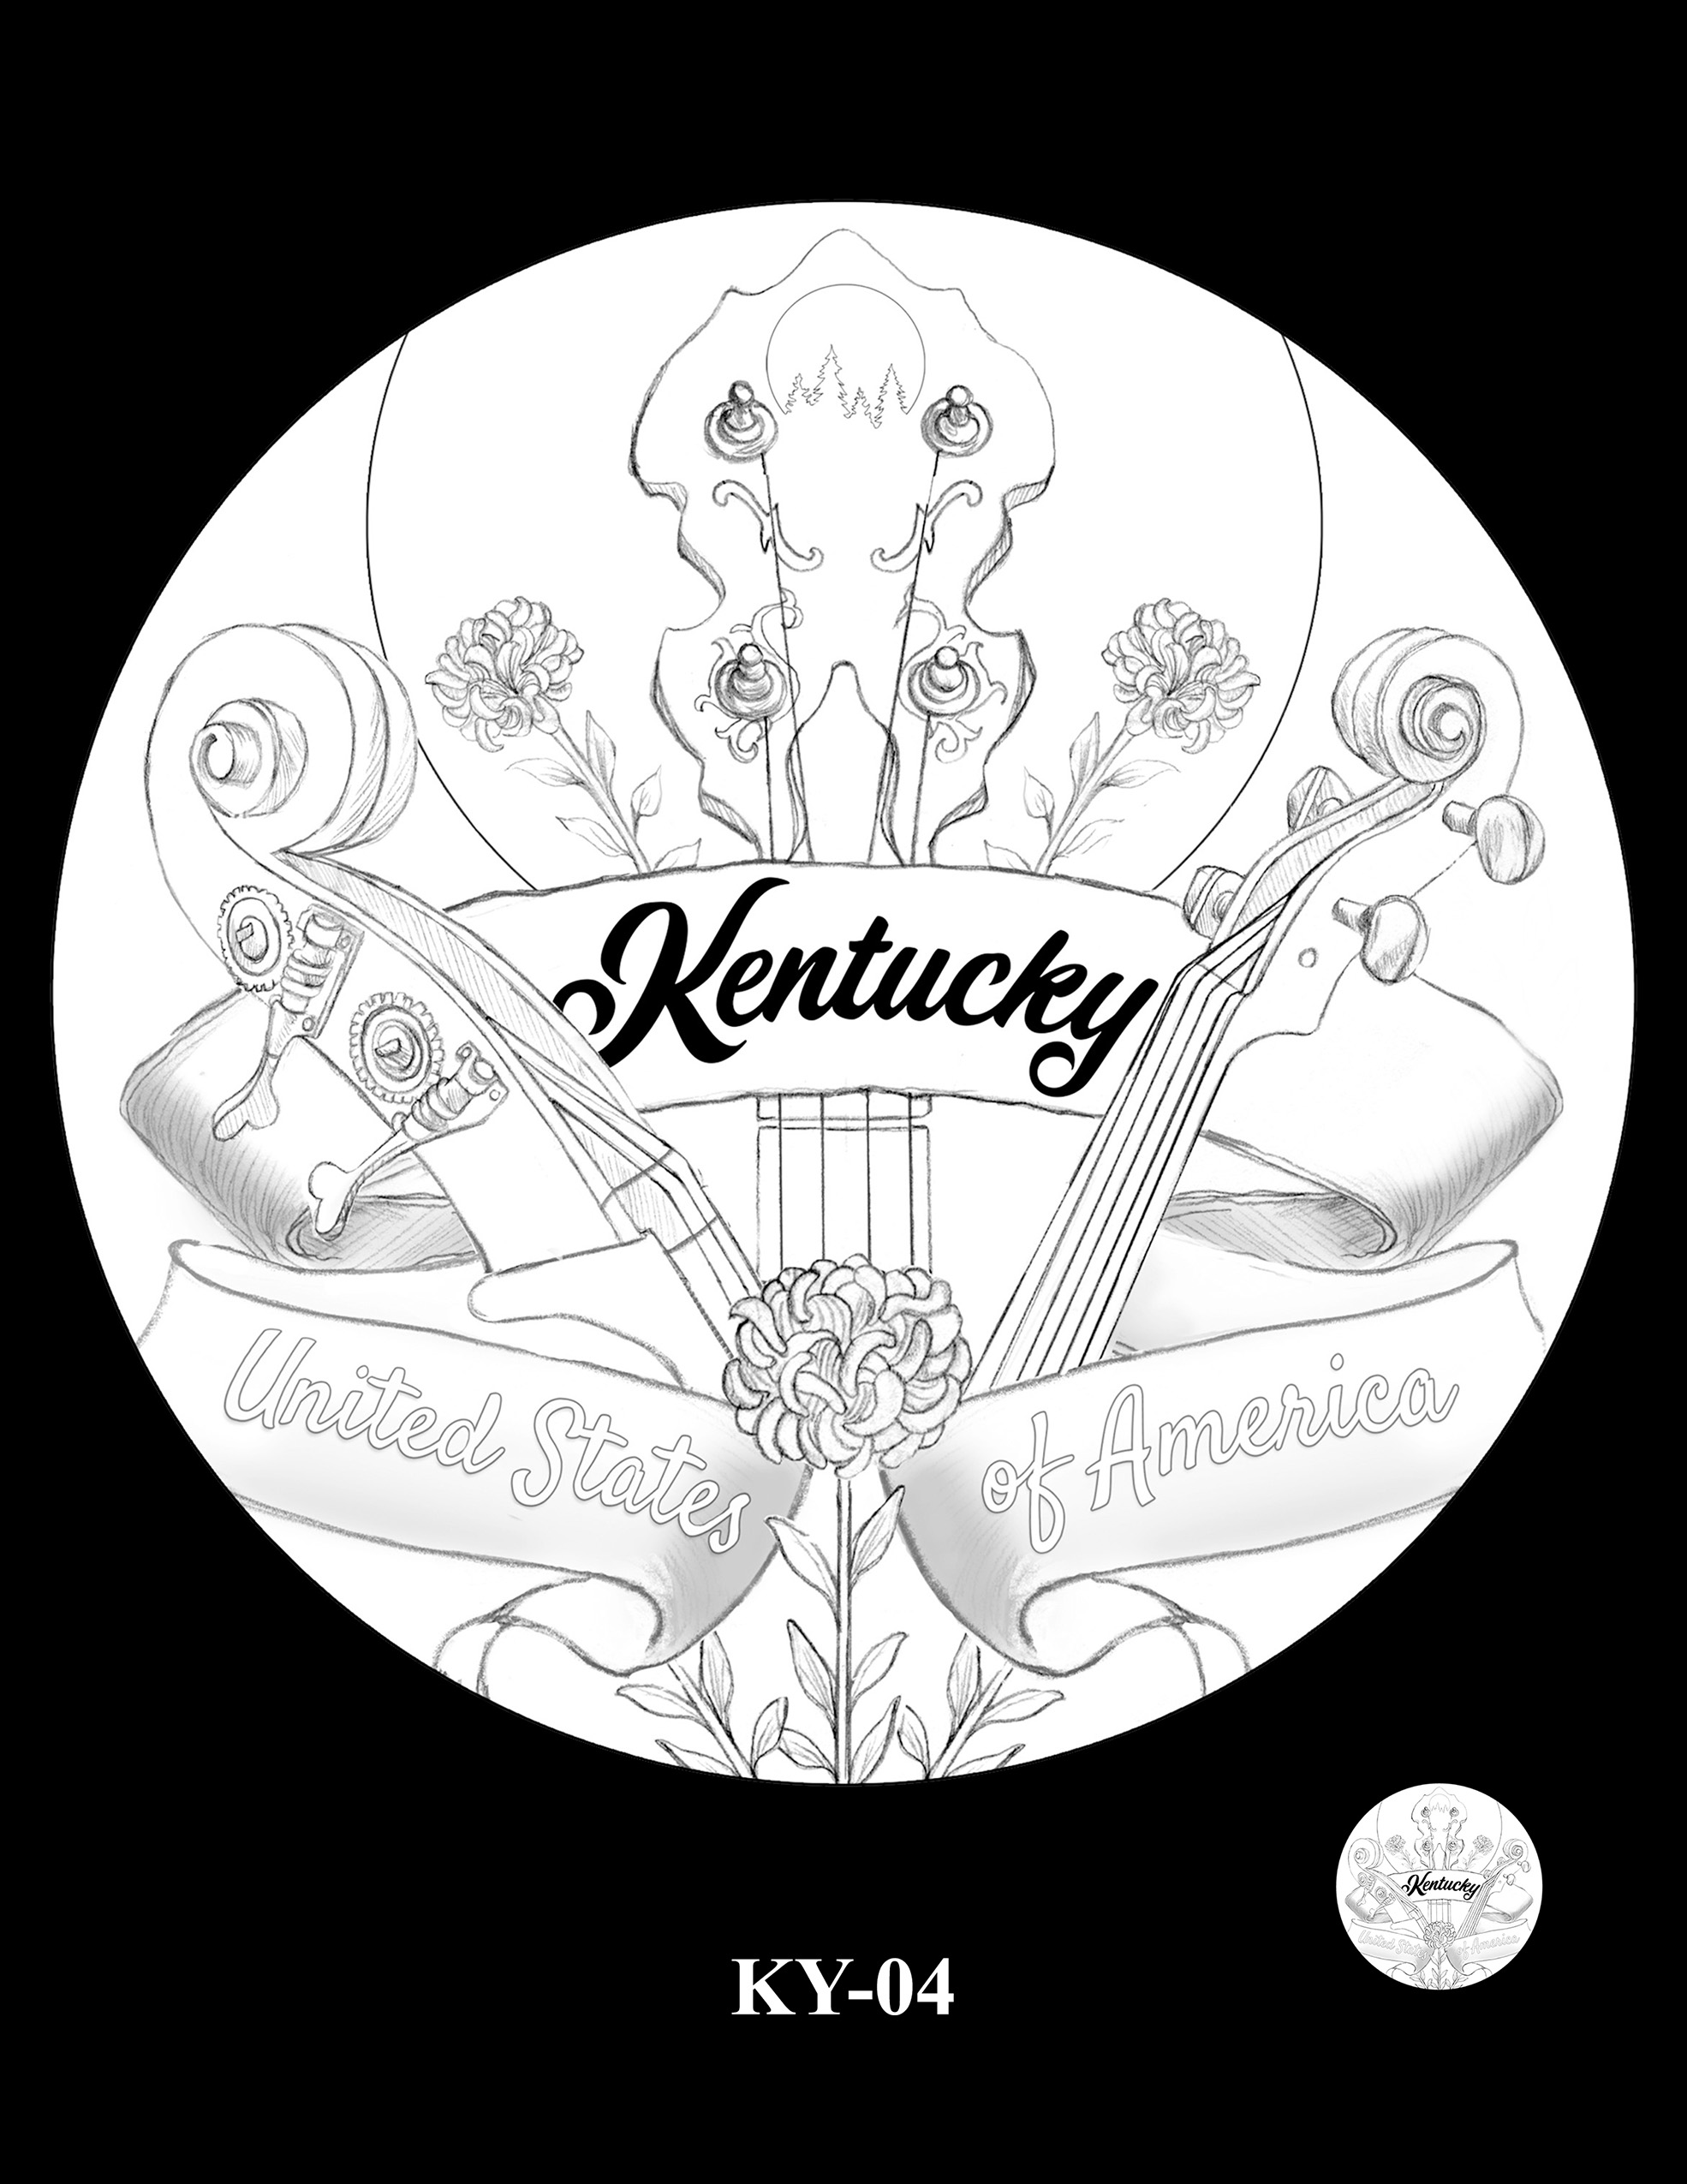 KY-04 -- 2022 American Innovation $1 Coin - Kentucky